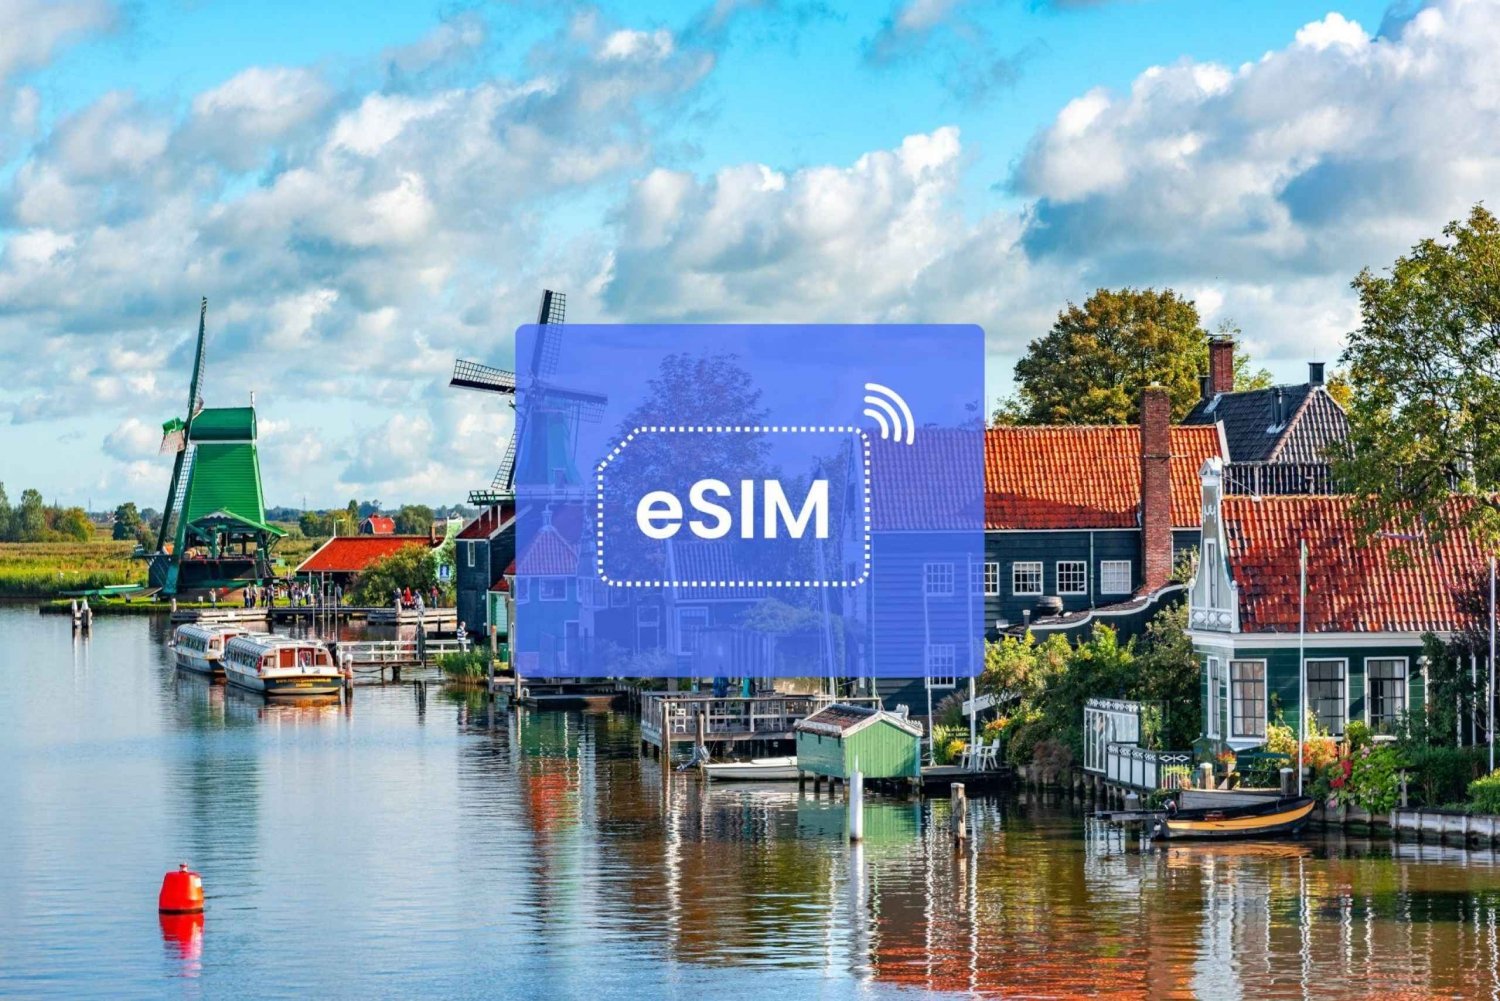 Amsterdam: Países Bajos/ Europa eSIM Roaming Plan de Datos Móviles